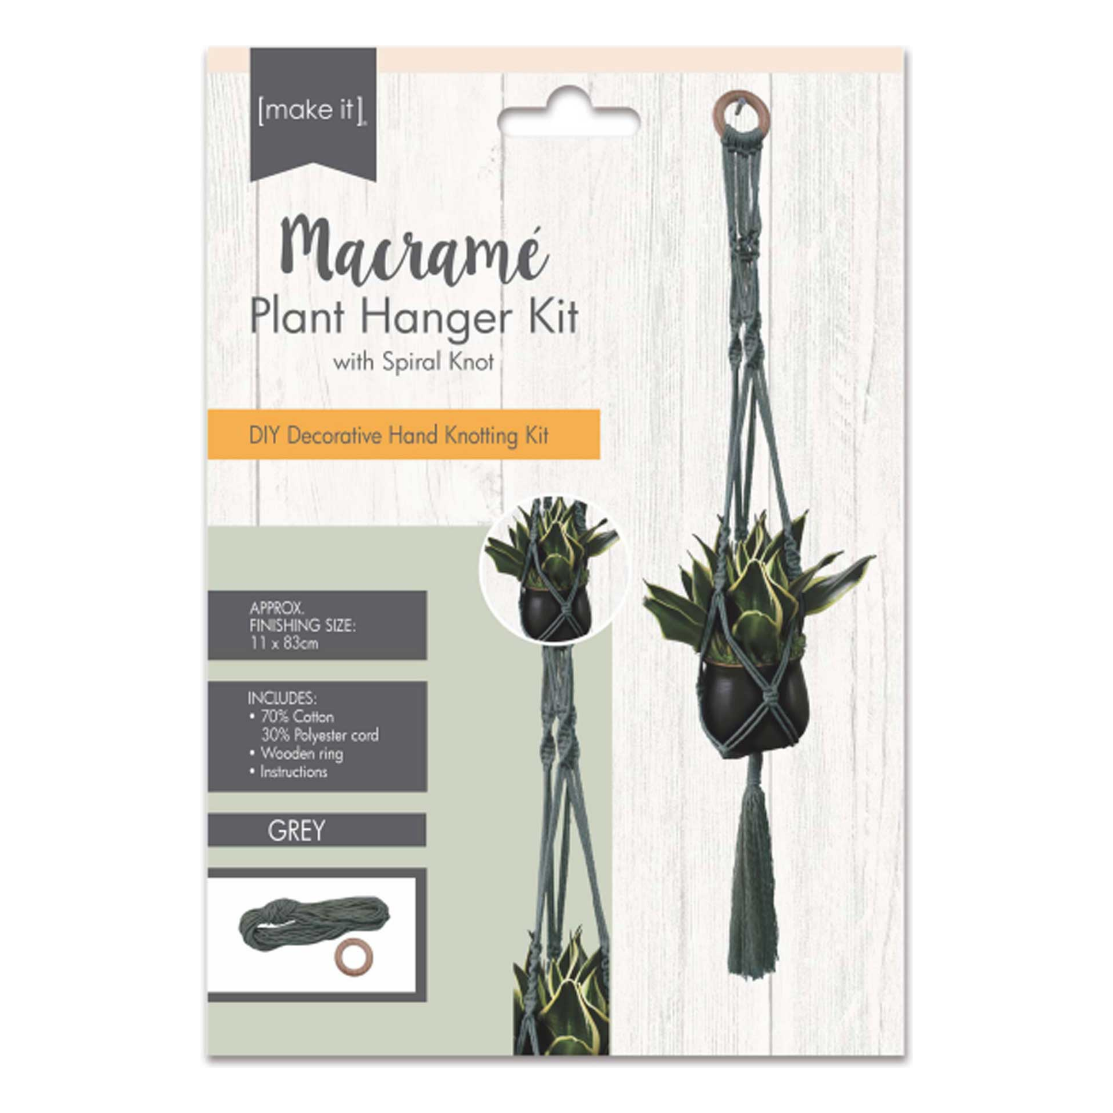 Macrame Plant Hanger Kit with Spiral Knot - Grey - CRAFT2U